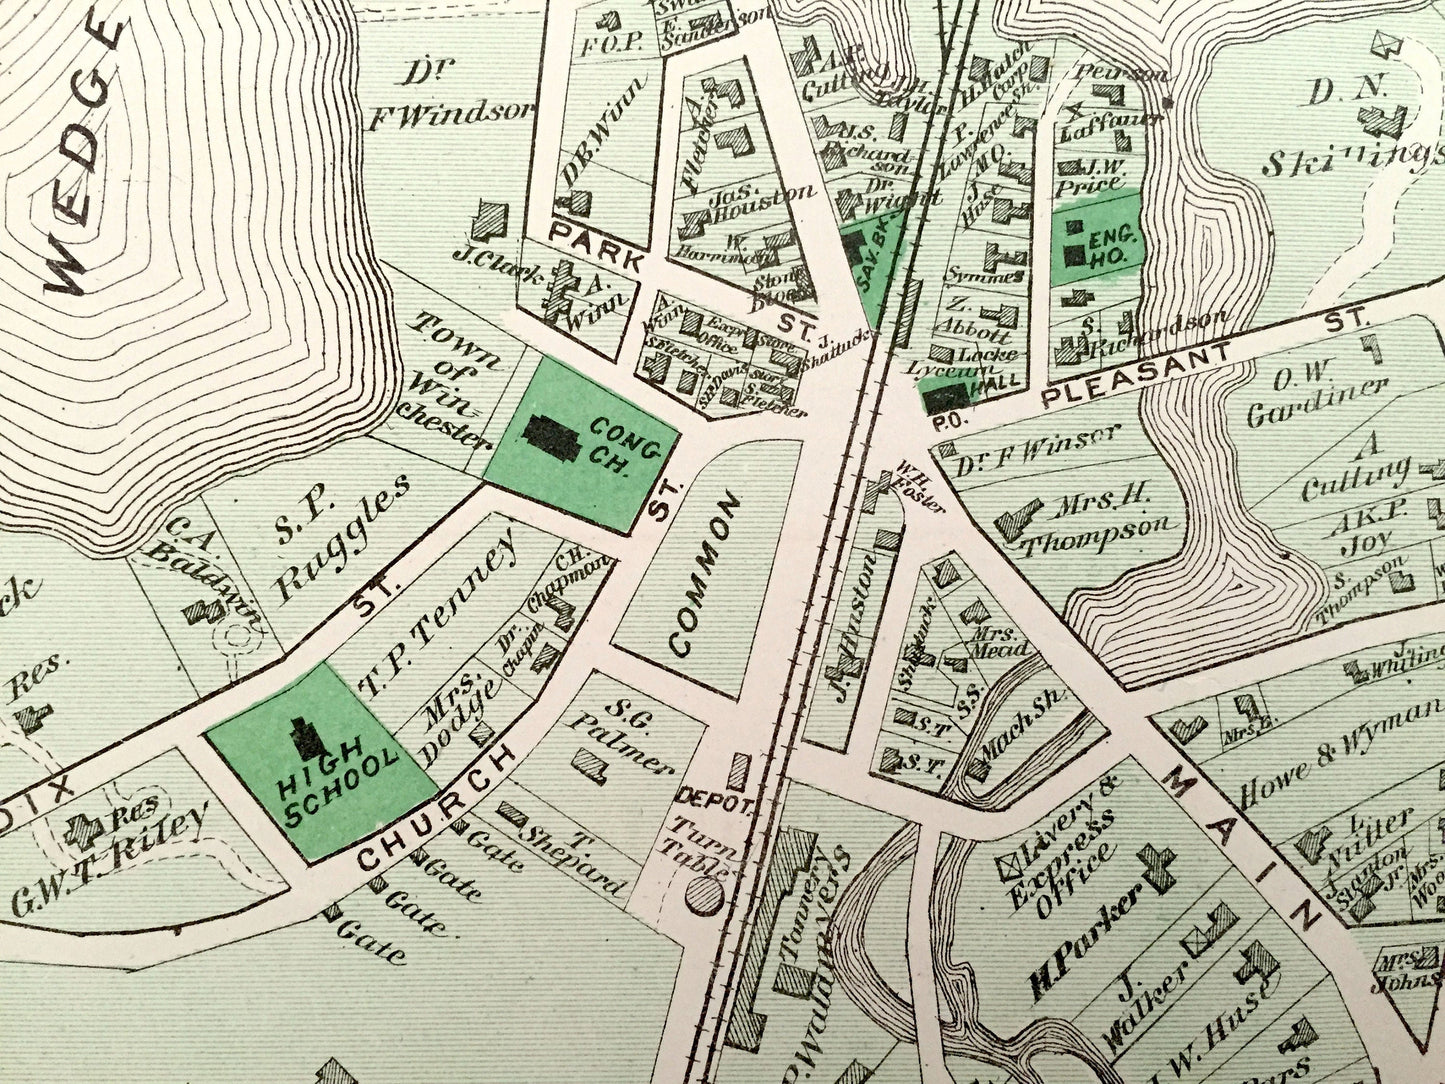 Antique 1875 Winchester & Stow, Massachusetts Map from J.B. Beers Atlas of Middlesex County – Lower Village, Rock Bottom, Assabet, Aberjona